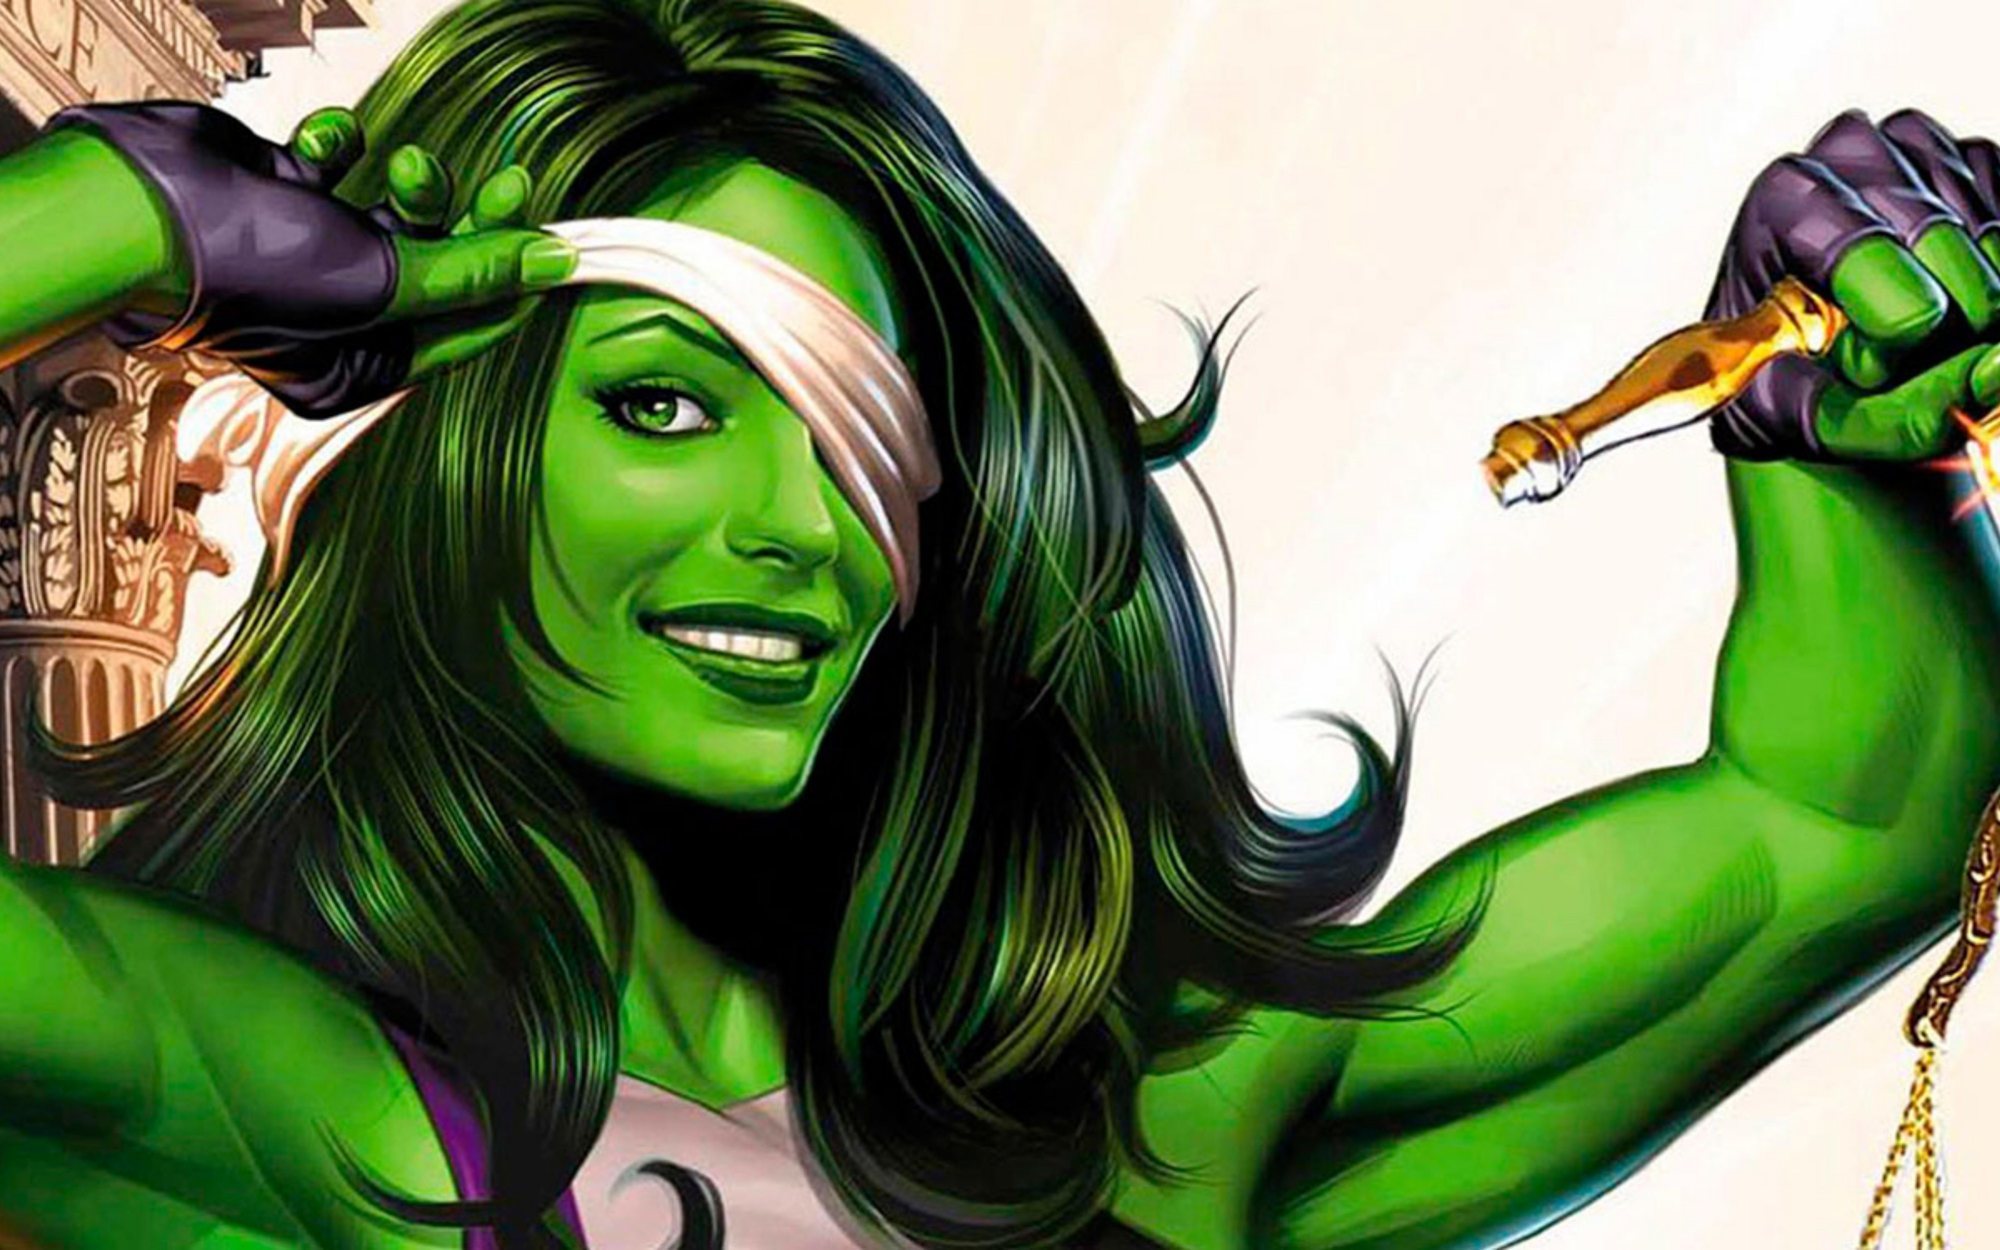 'She-Hulk', de Disney+, será una comedia legal